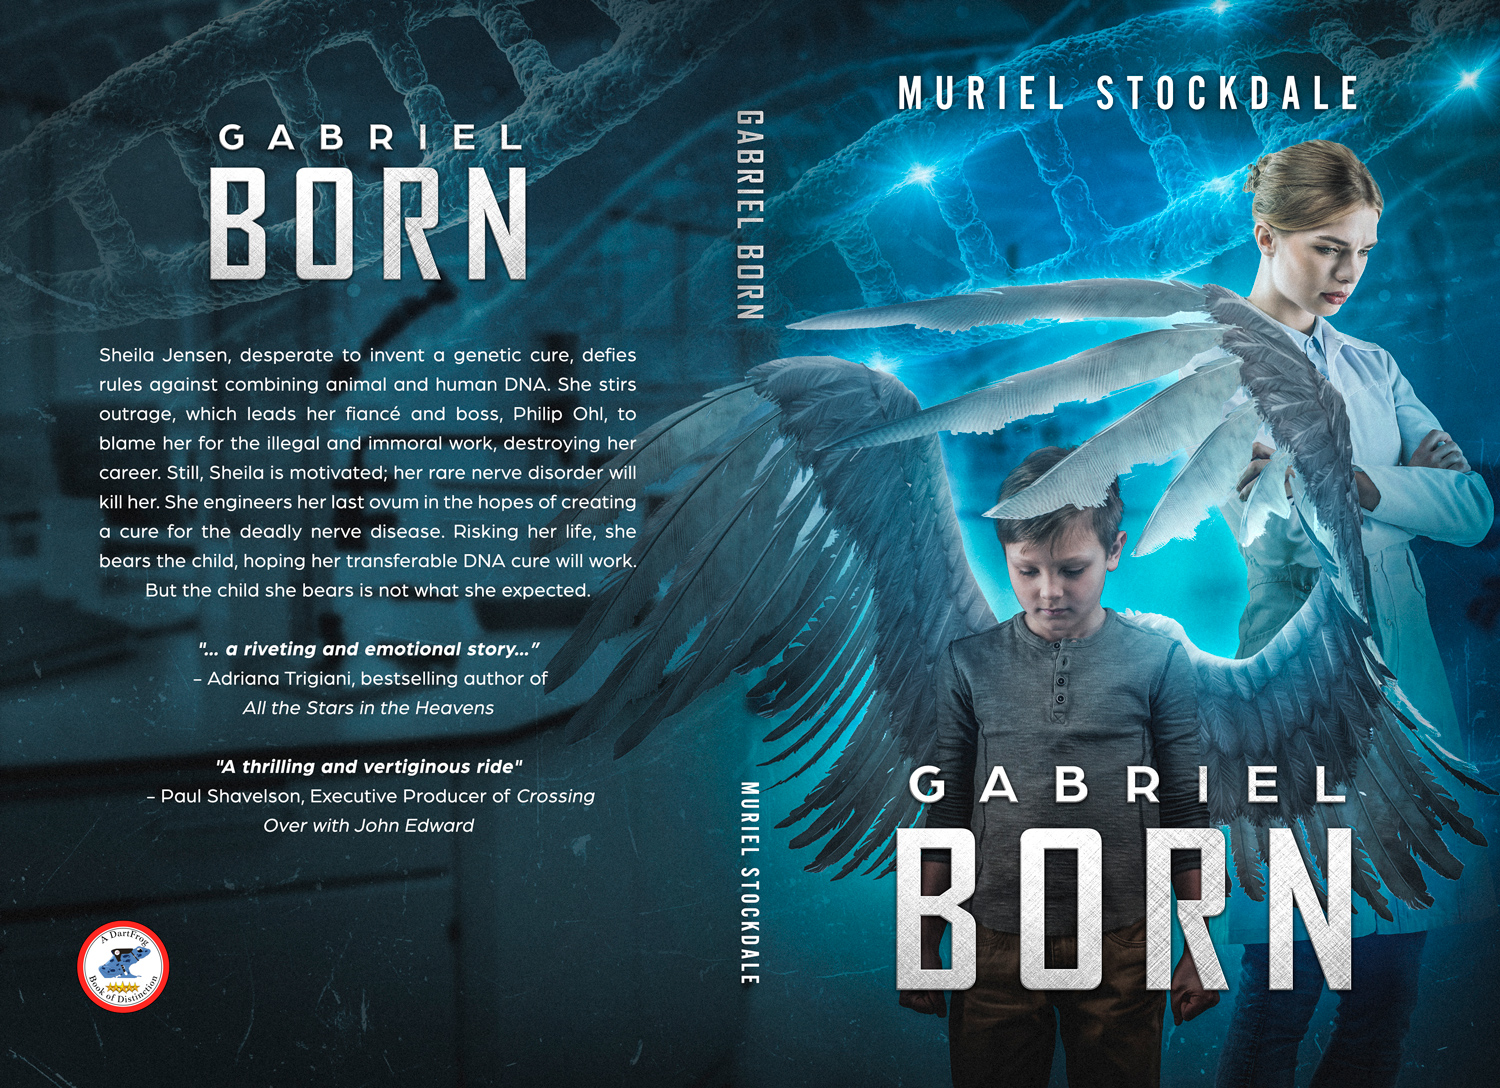 Gabriel Born by Muriel Stockdale